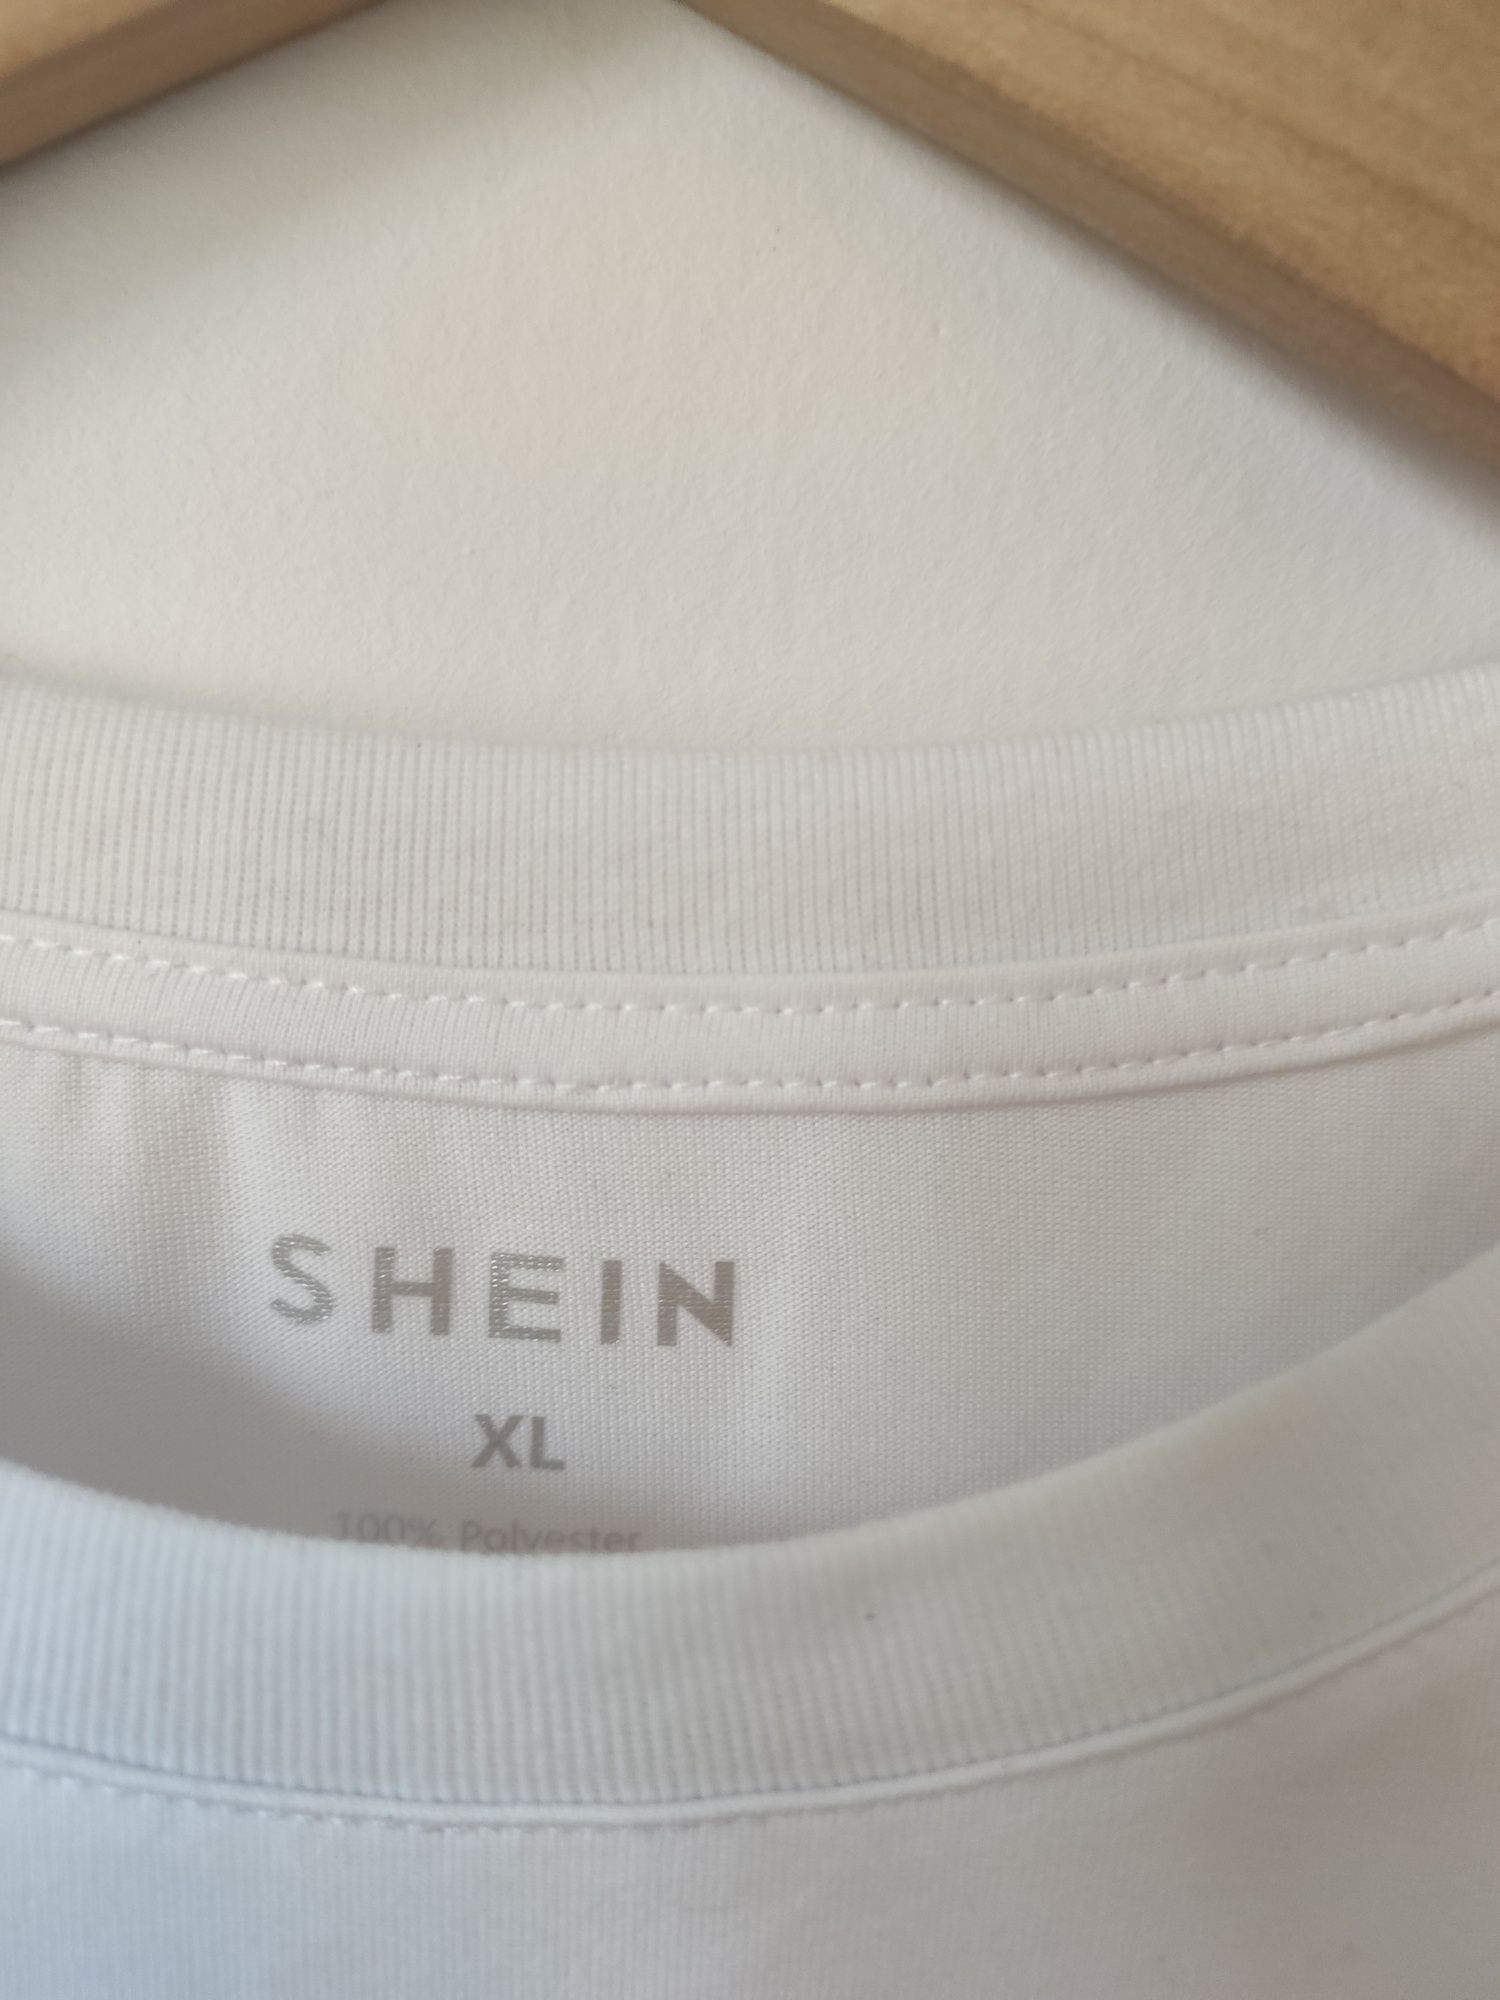 Biała bluzka t-shirt w motyle letni summer shein xl XXL 42 44